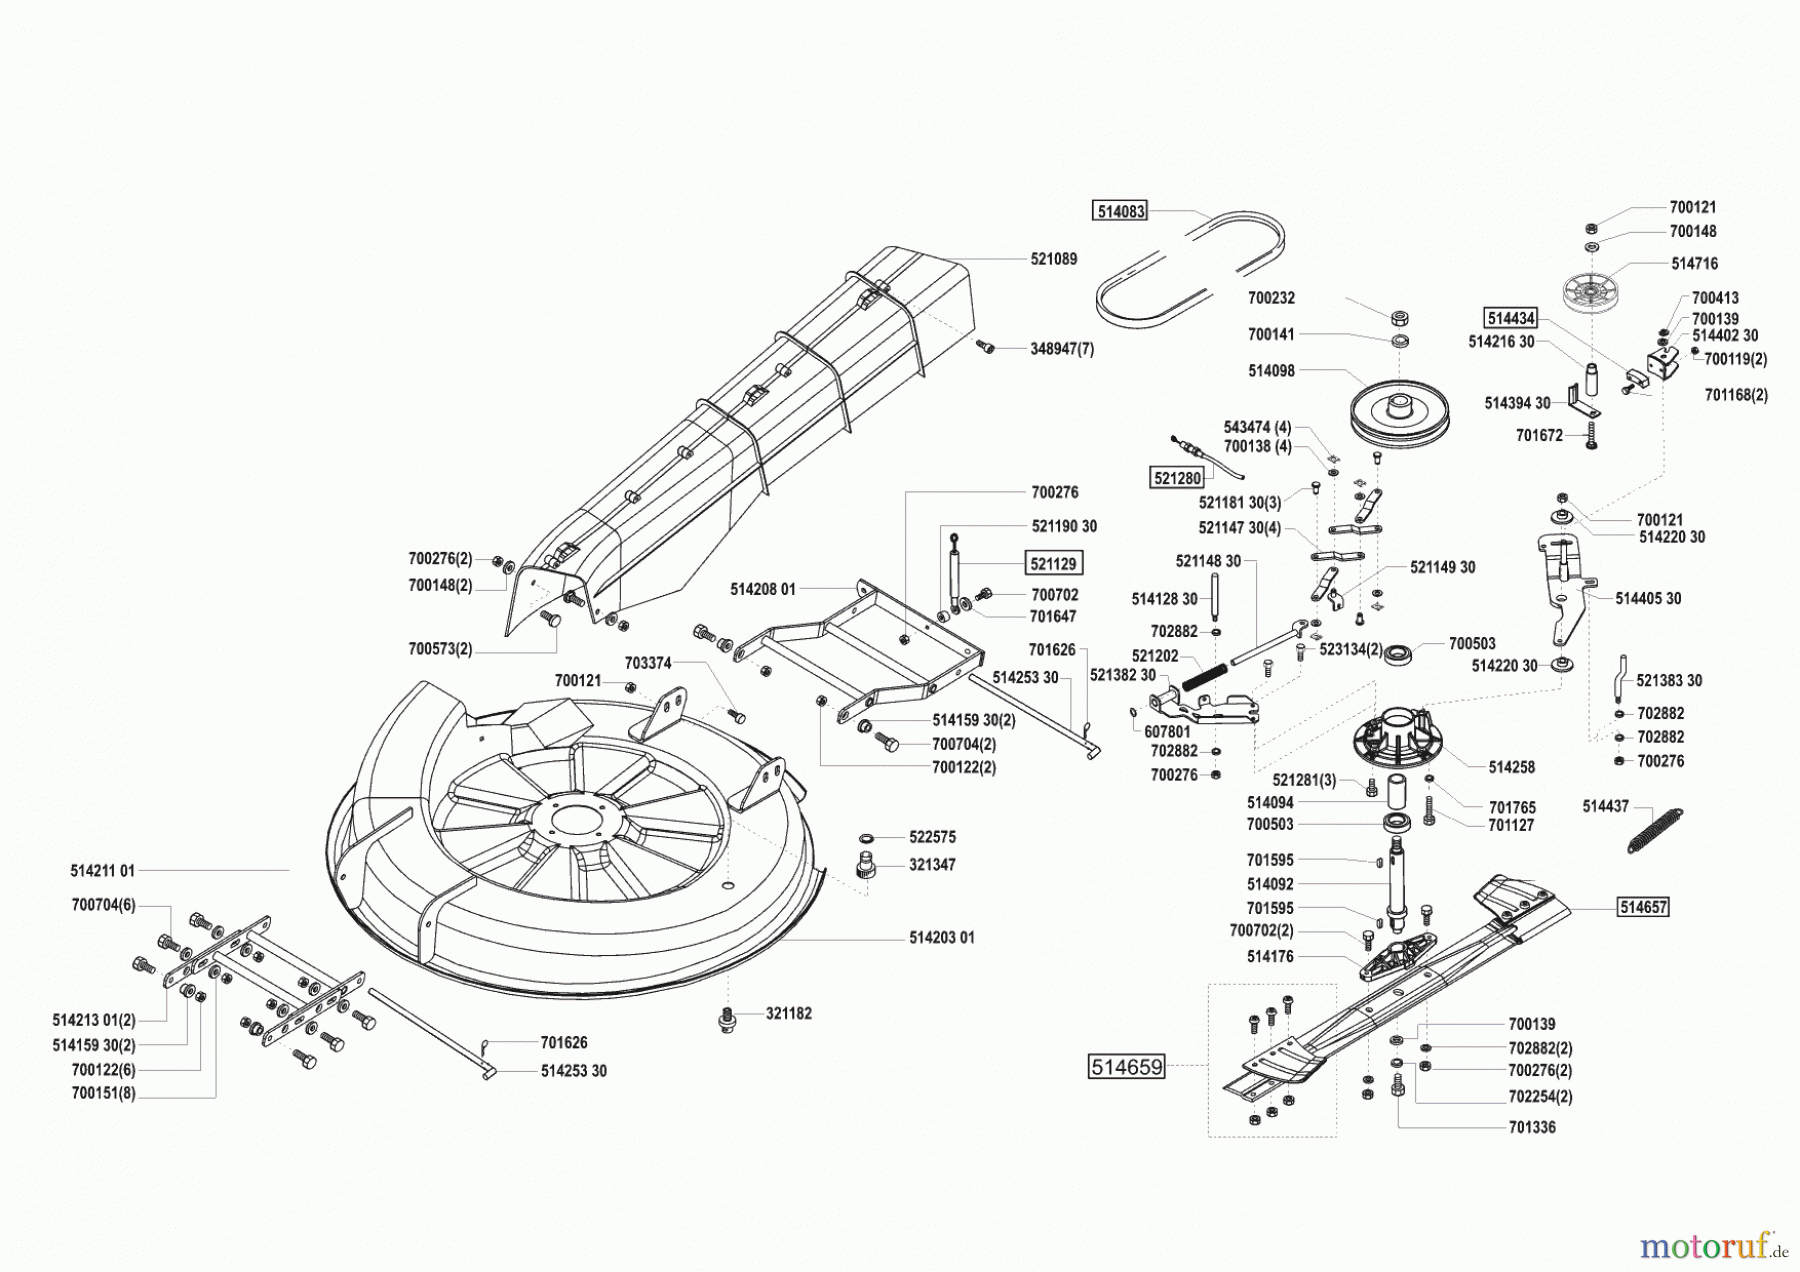  Ginge Gartentechnik Rasentraktor T 800 vor 02/2001 Seite 5